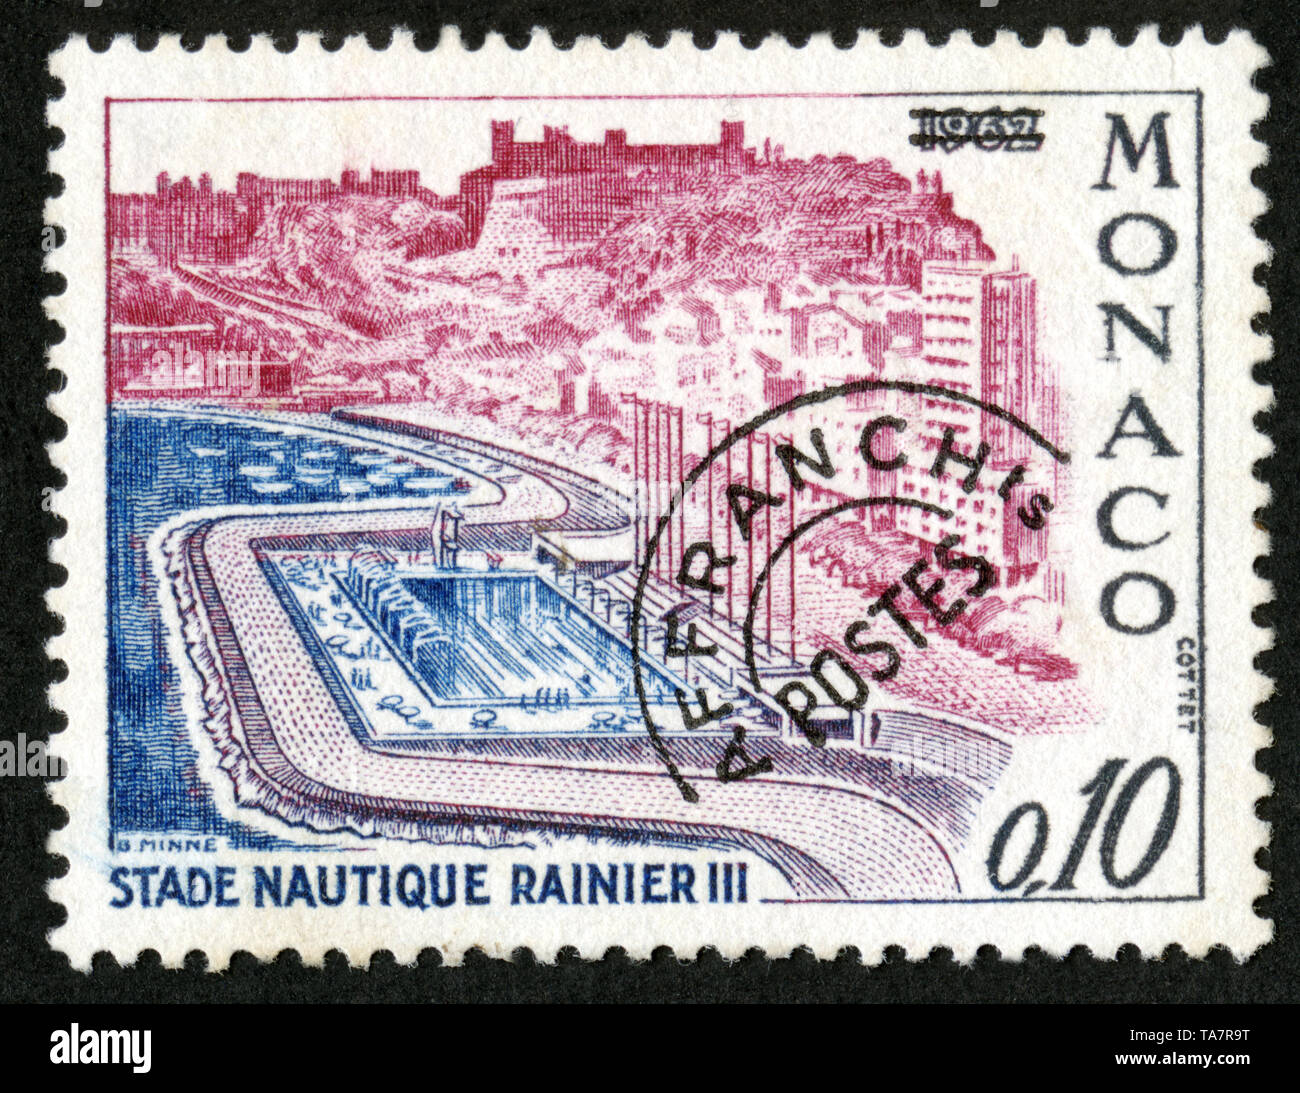 Stamp print in Monaco,architecture,1962, nautical stage rainier III Stock  Photo - Alamy